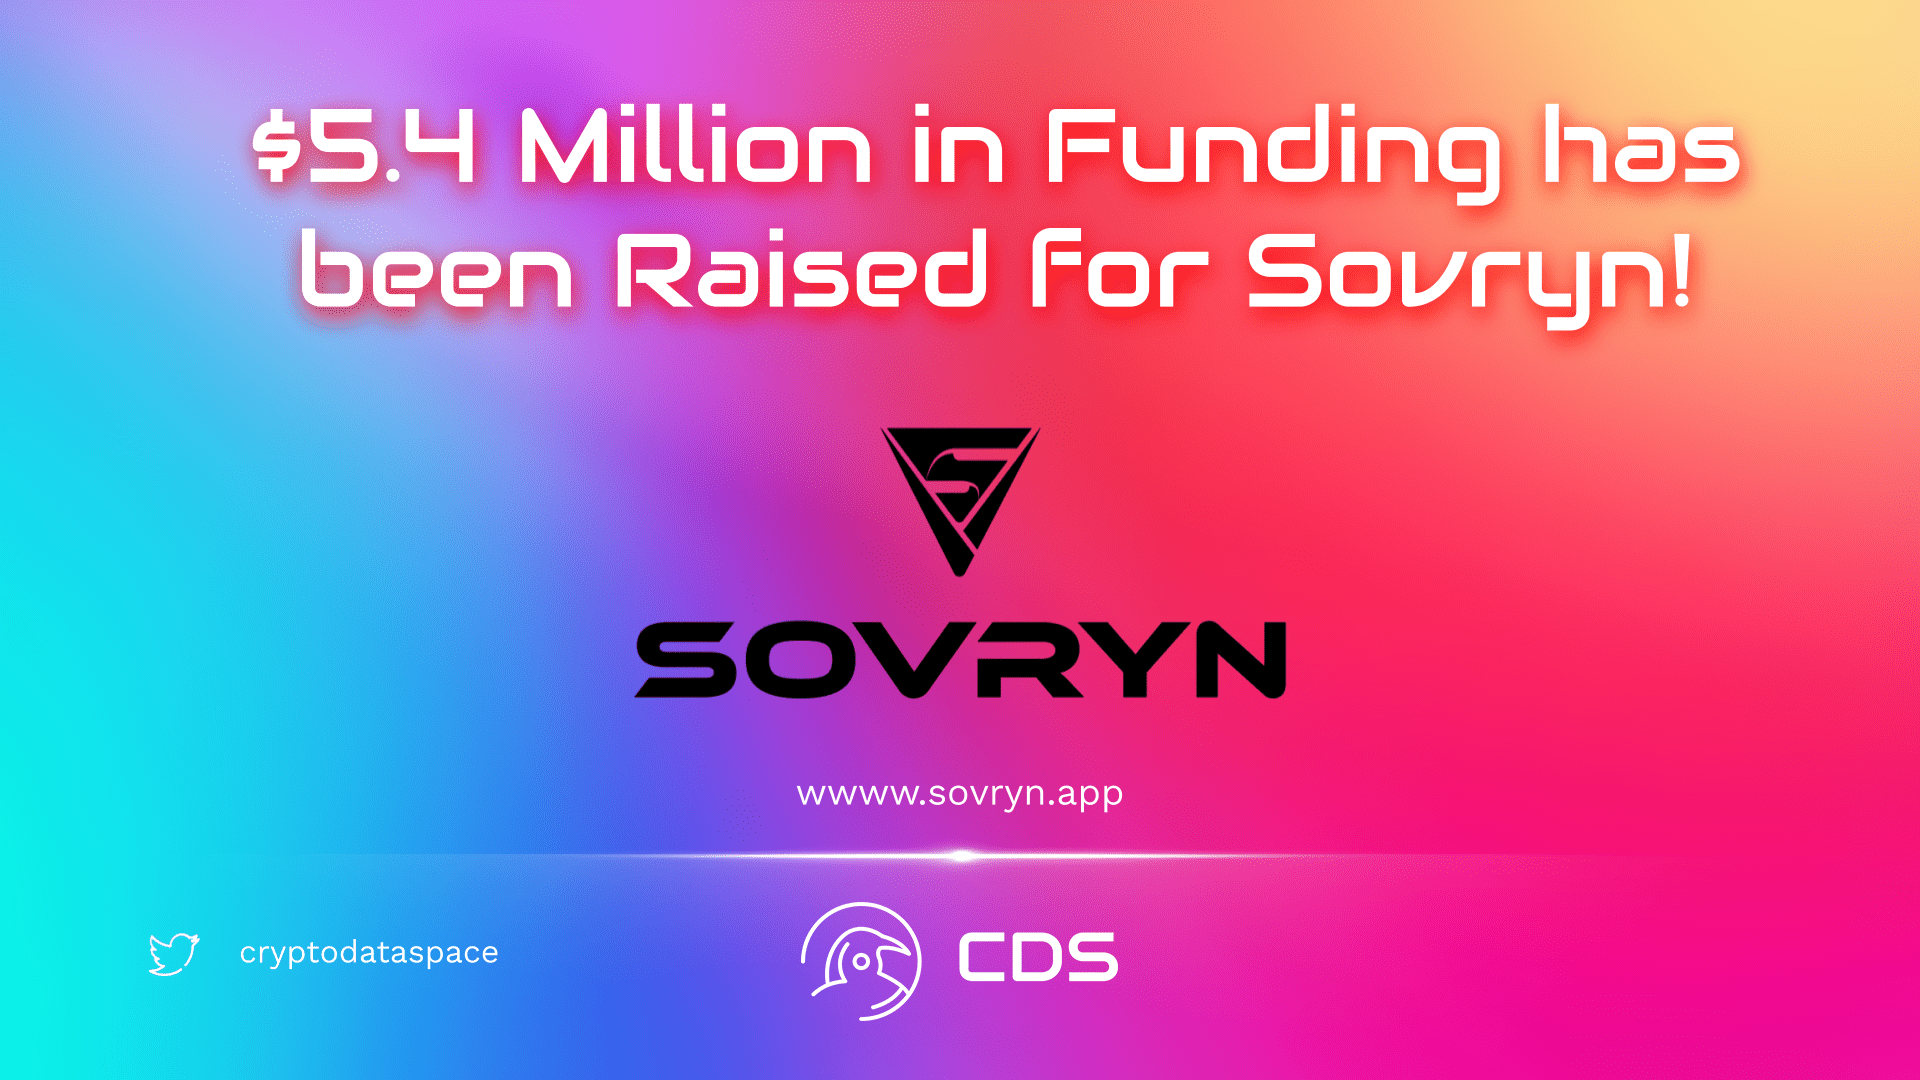 $5.4 Million in Funding has been Raised for Sovryn!